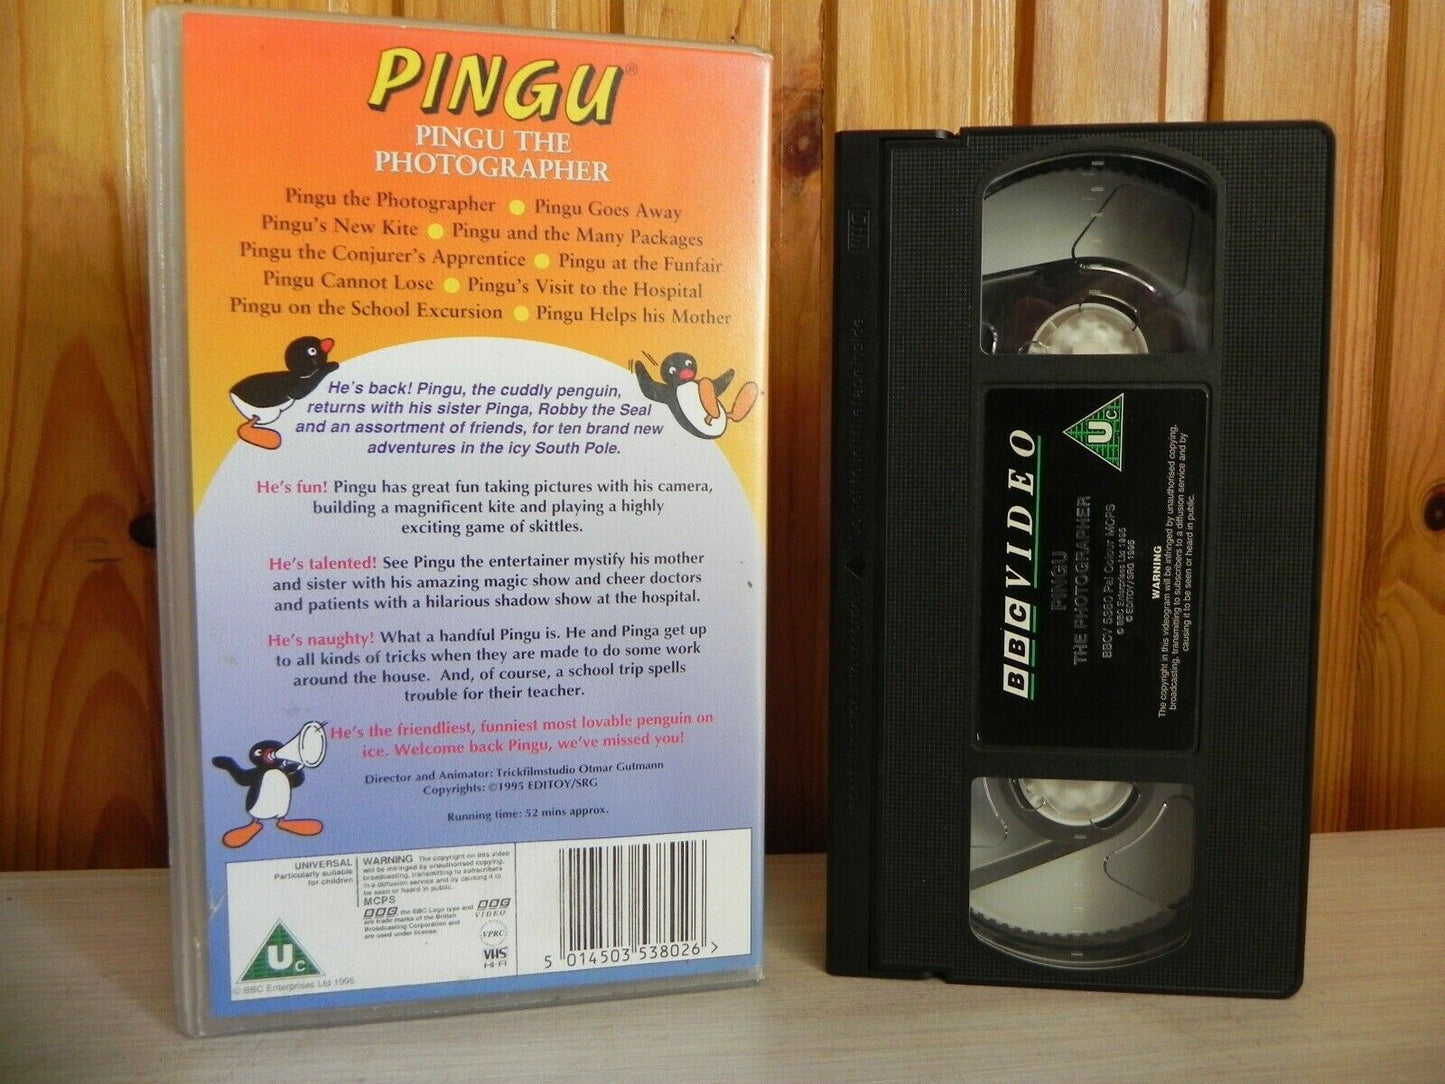 BBC Pingu: The Photographer 10 Adventures - Children's Educ Fun - Kids Pal VHS-